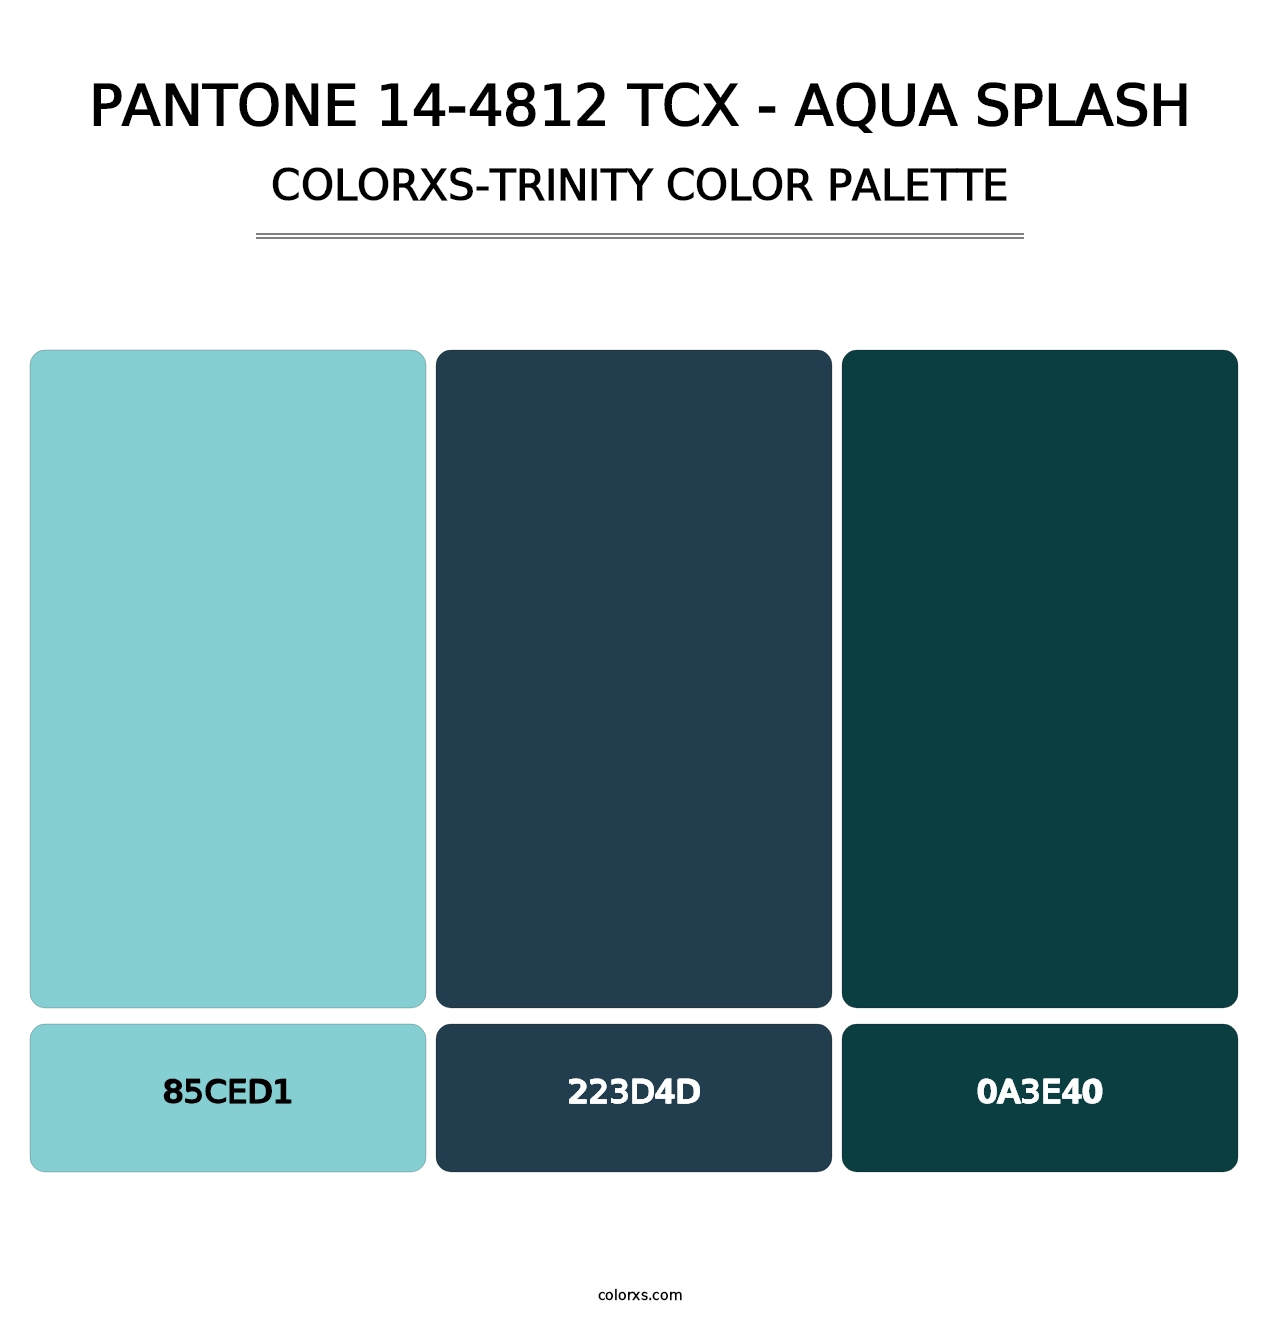 PANTONE 14-4812 TCX - Aqua Splash - Colorxs Trinity Palette